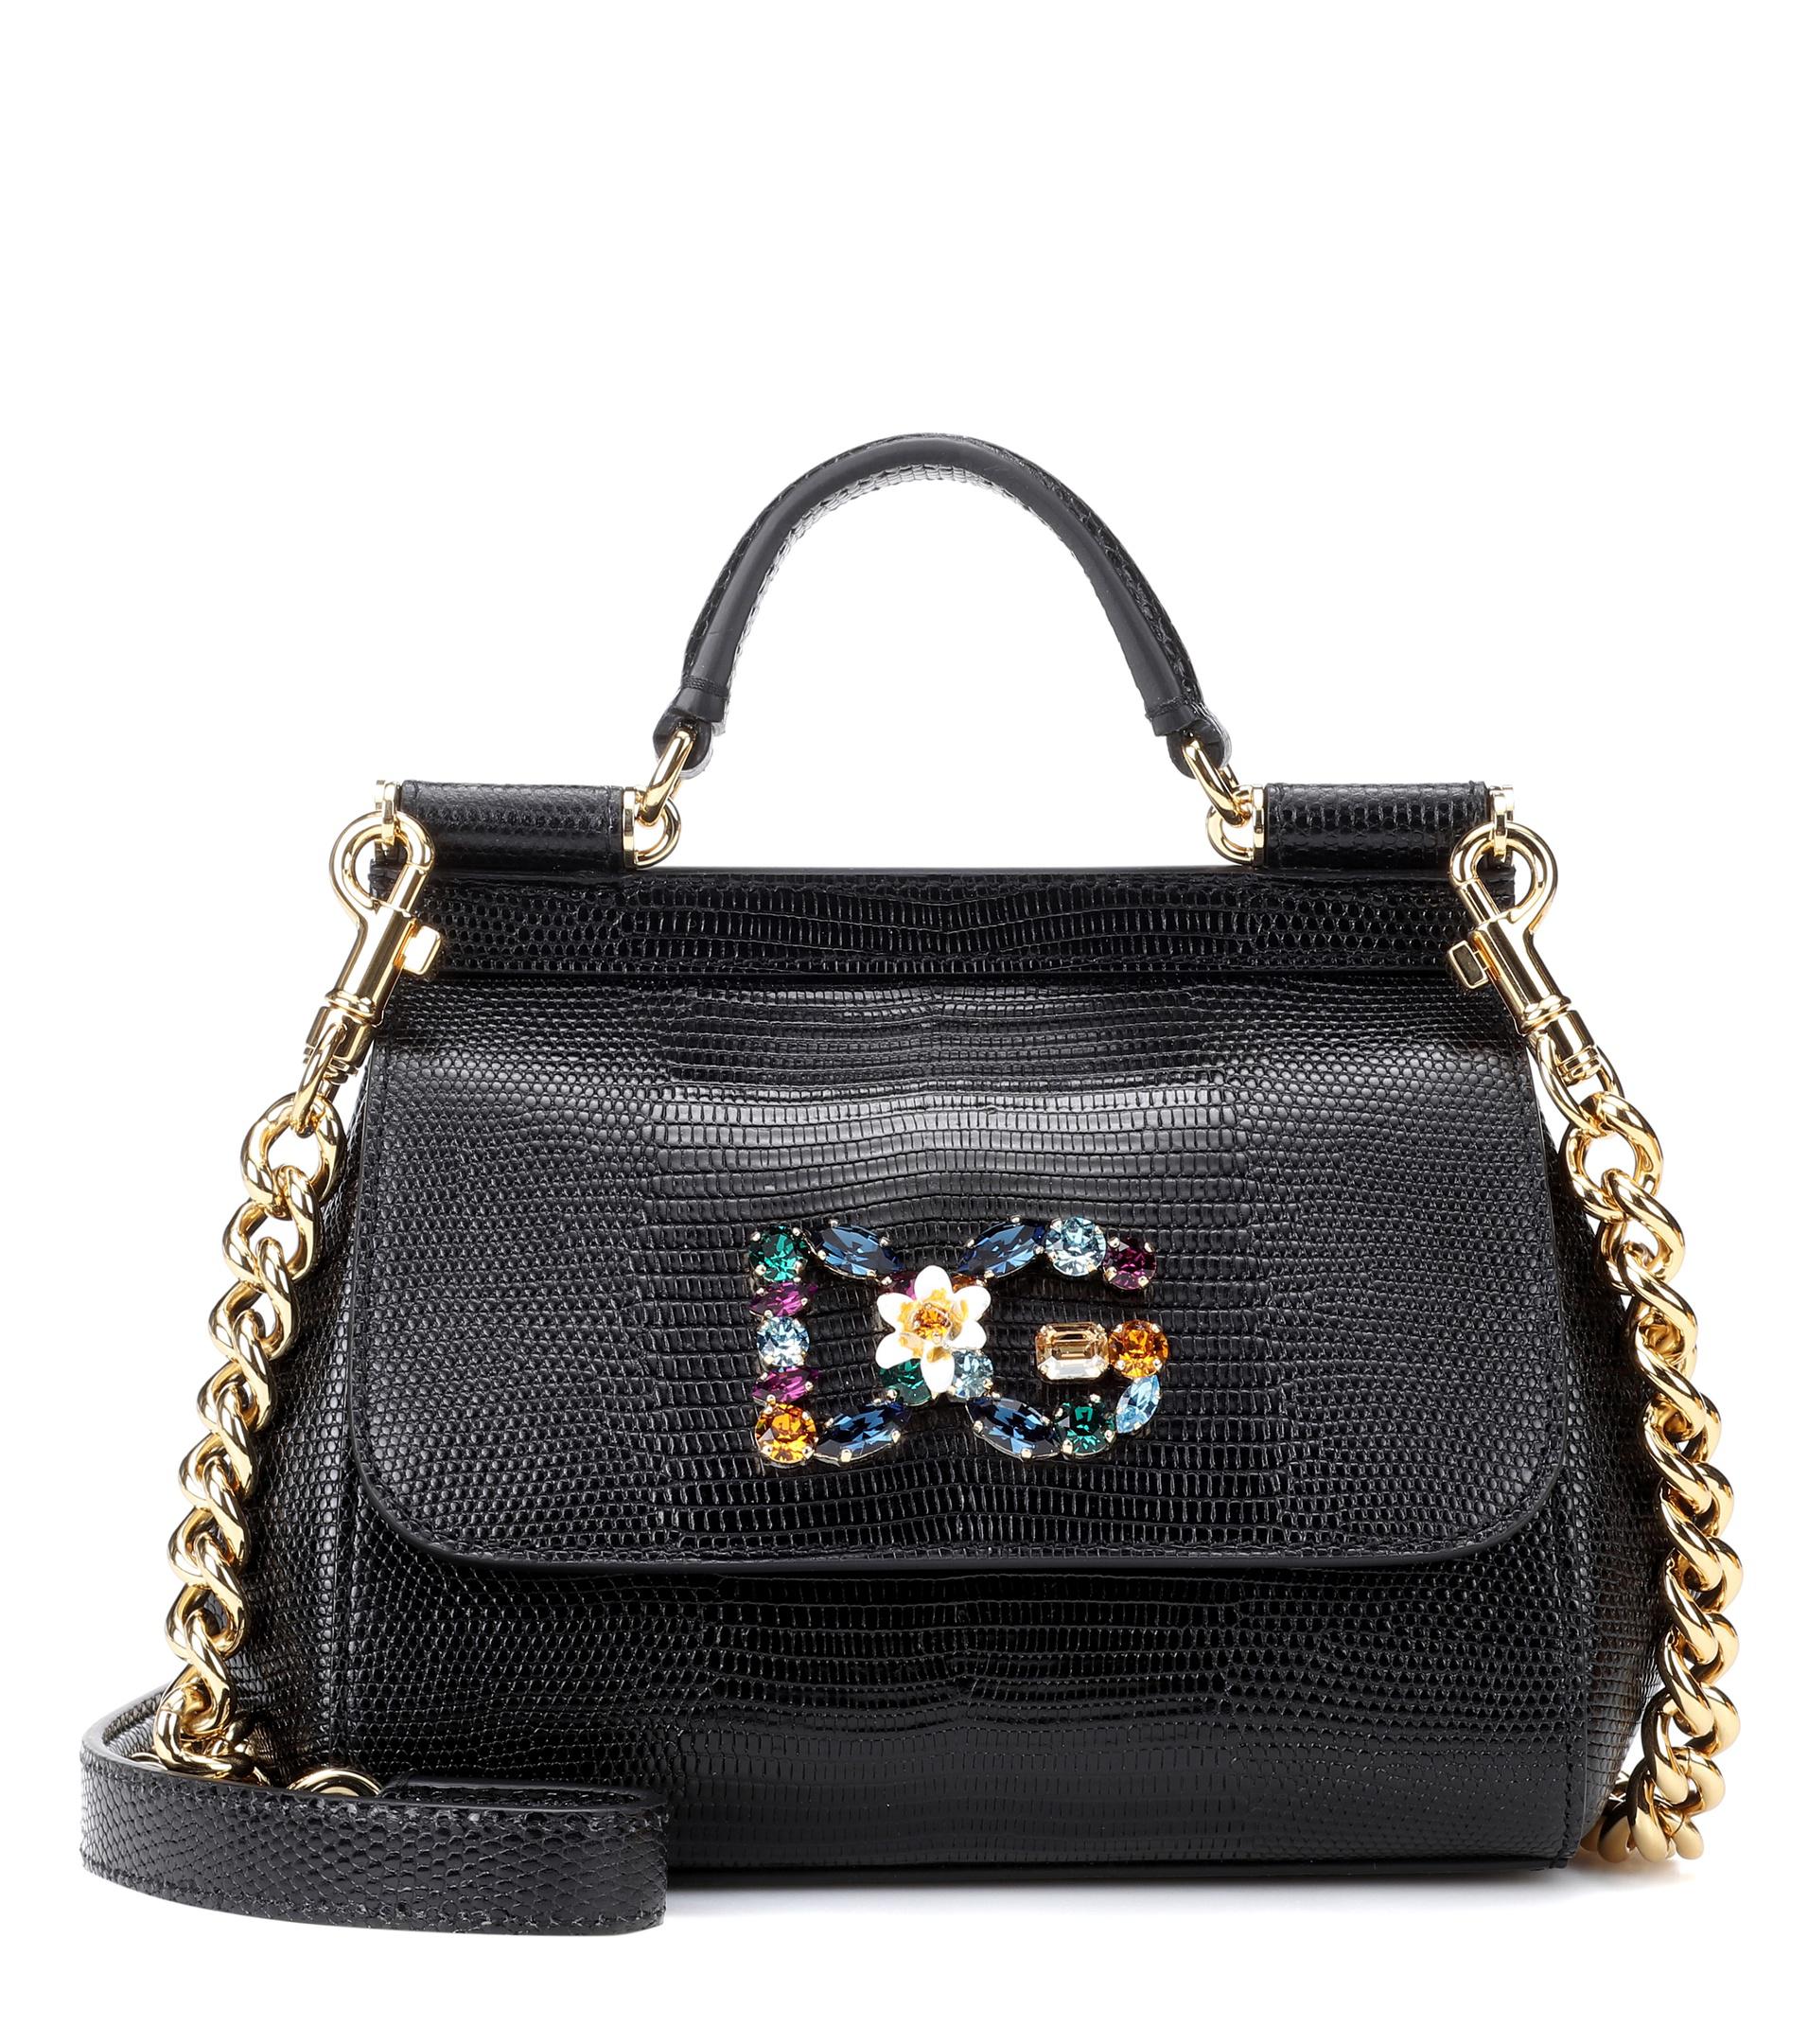 Dolce & Gabbana Sicily Mini Leather Shoulder Bag in Nero (Black) - Lyst